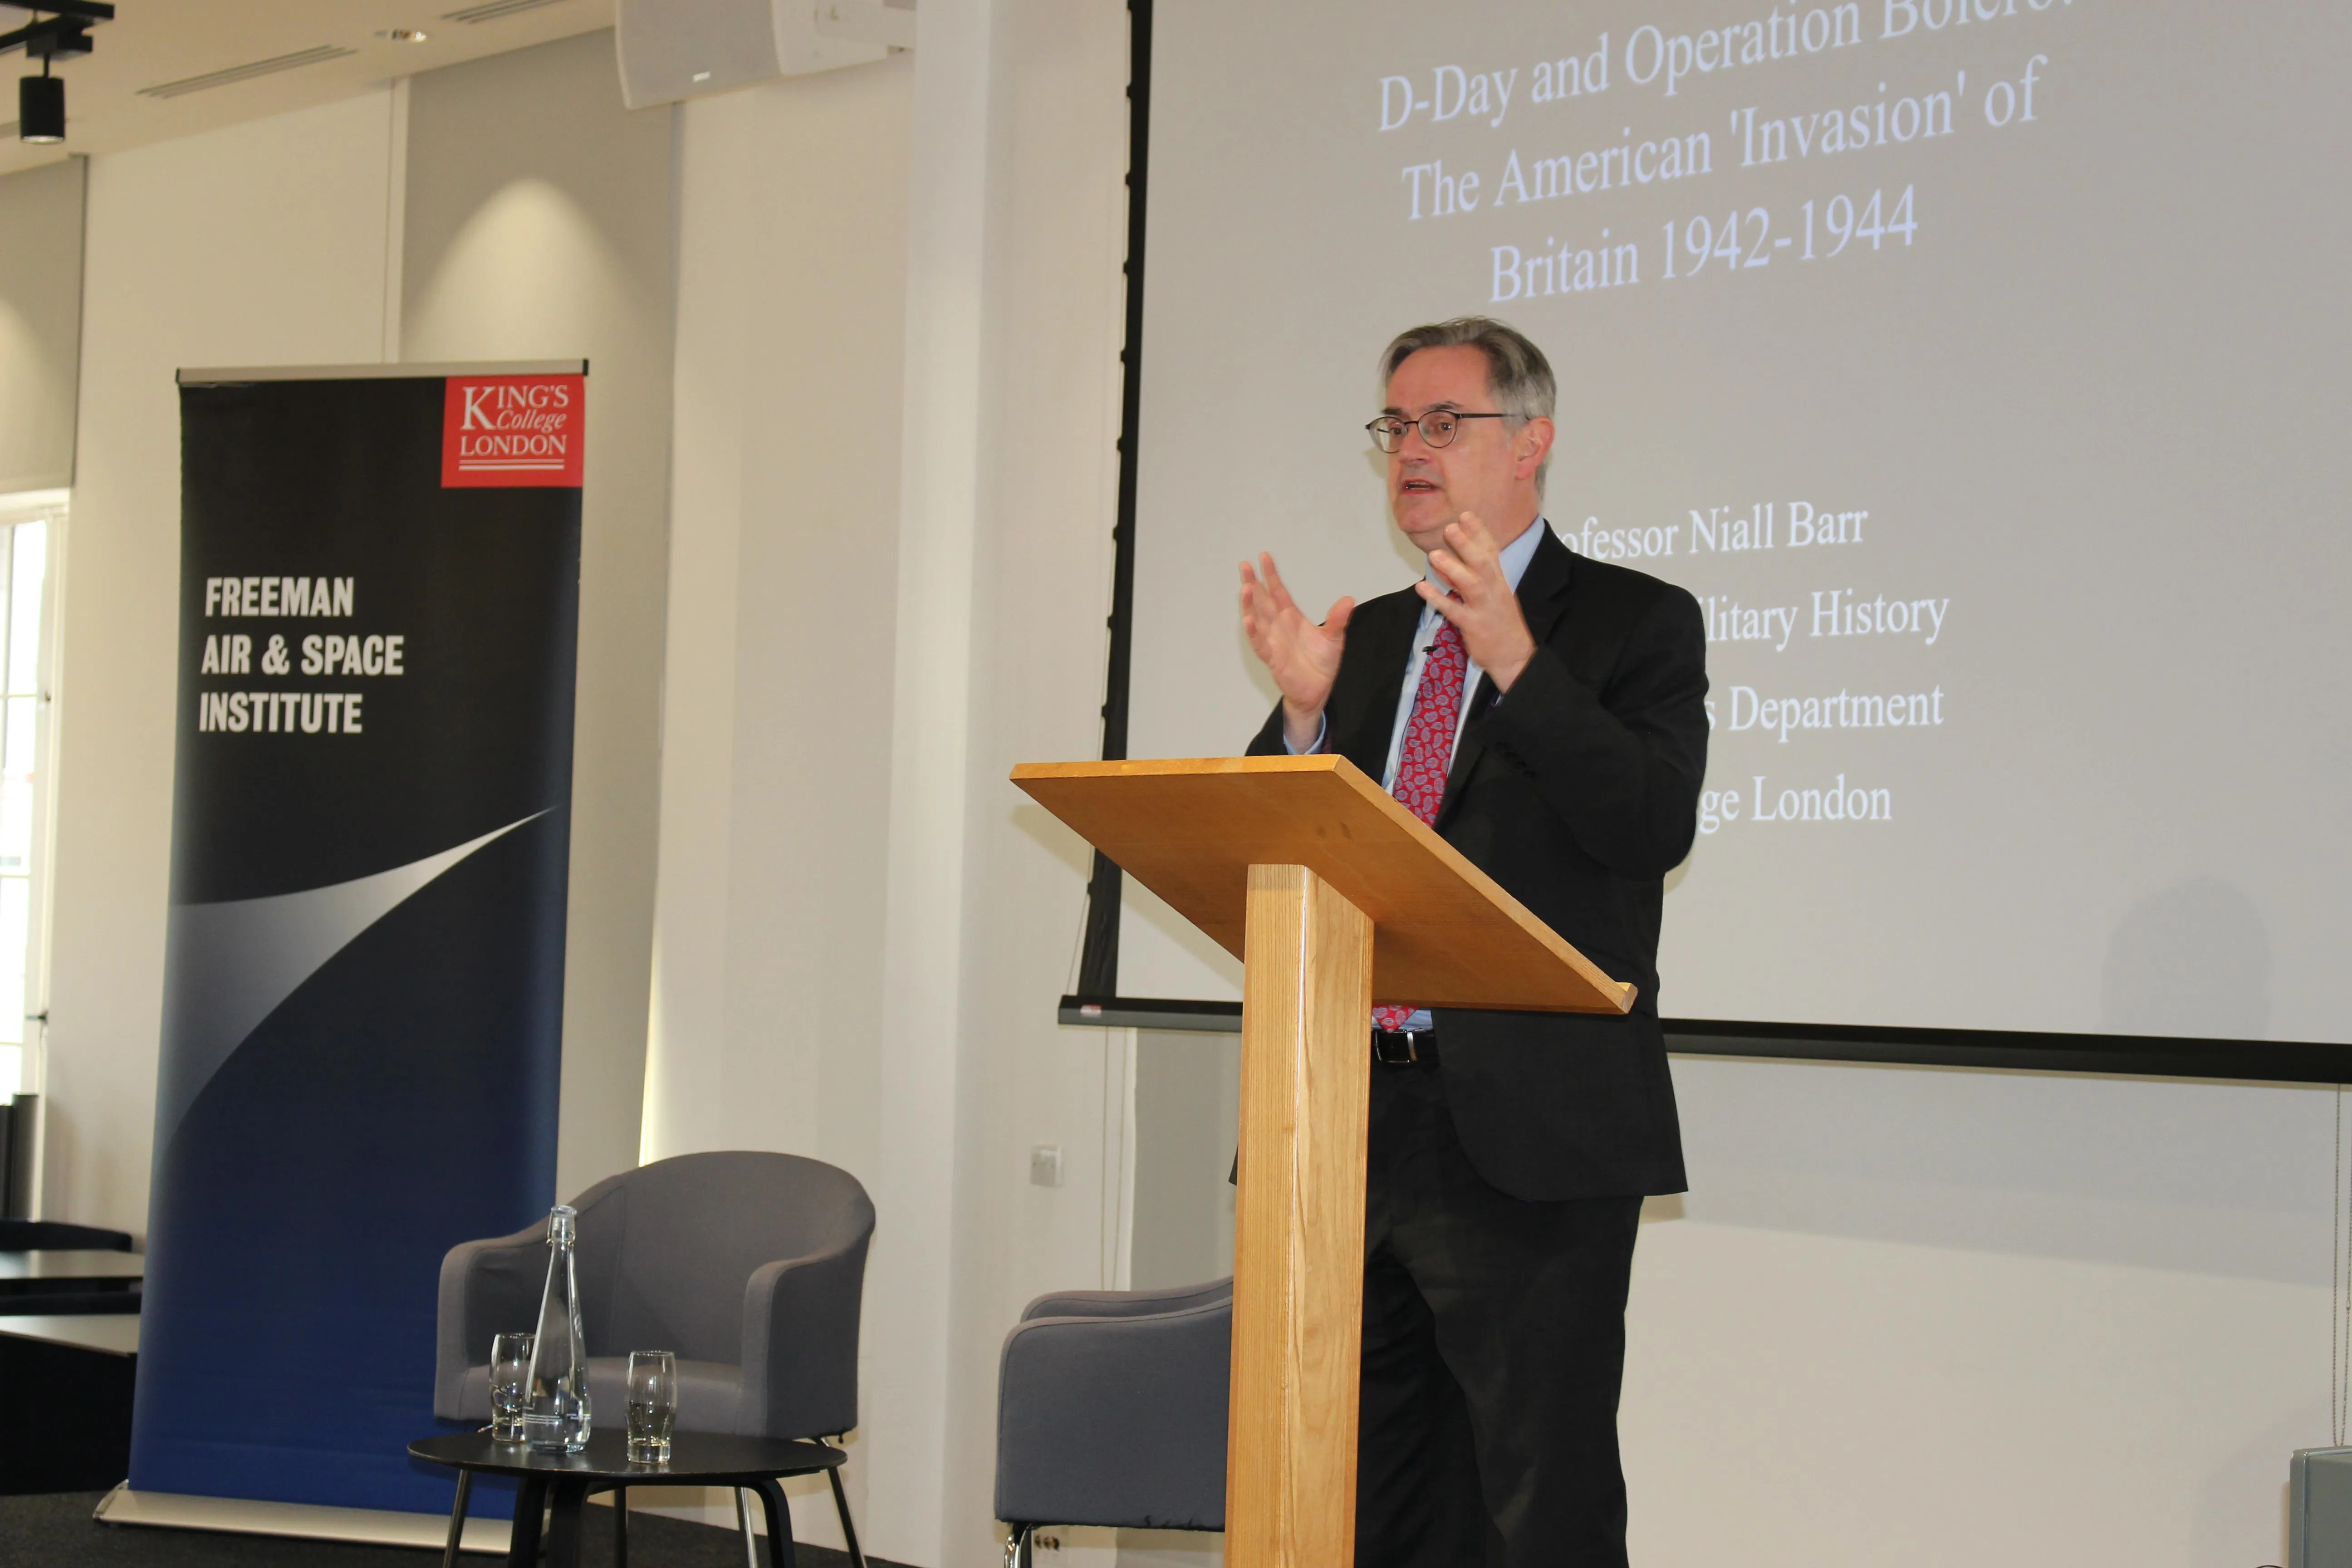 Professor Niall Barr spoke on D-Day and Operation Bolero.